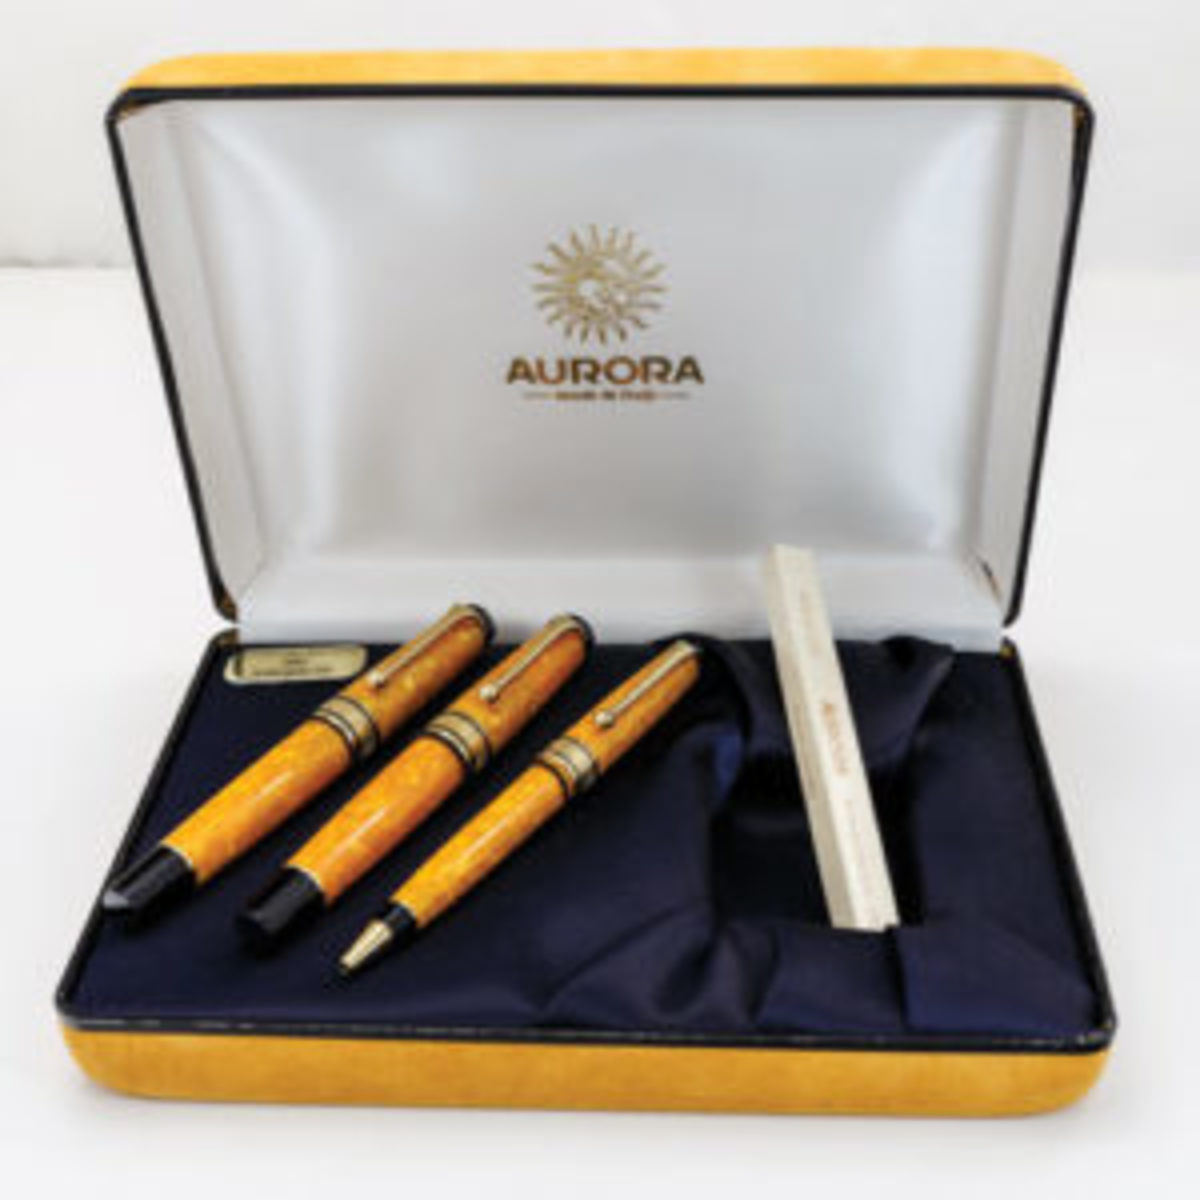 Aurora three-pen set